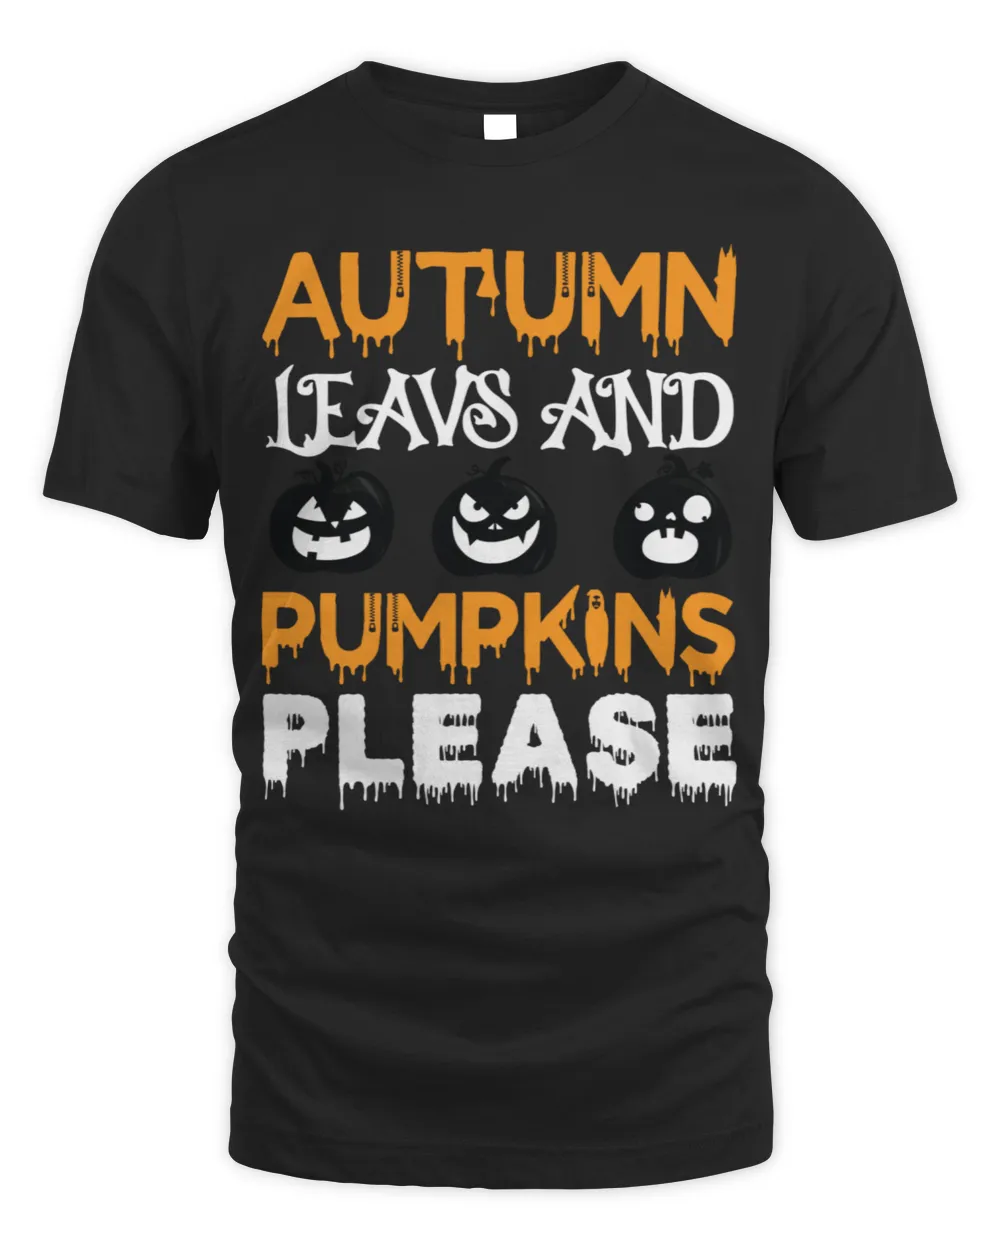 Autumn leavs and pumpkins please